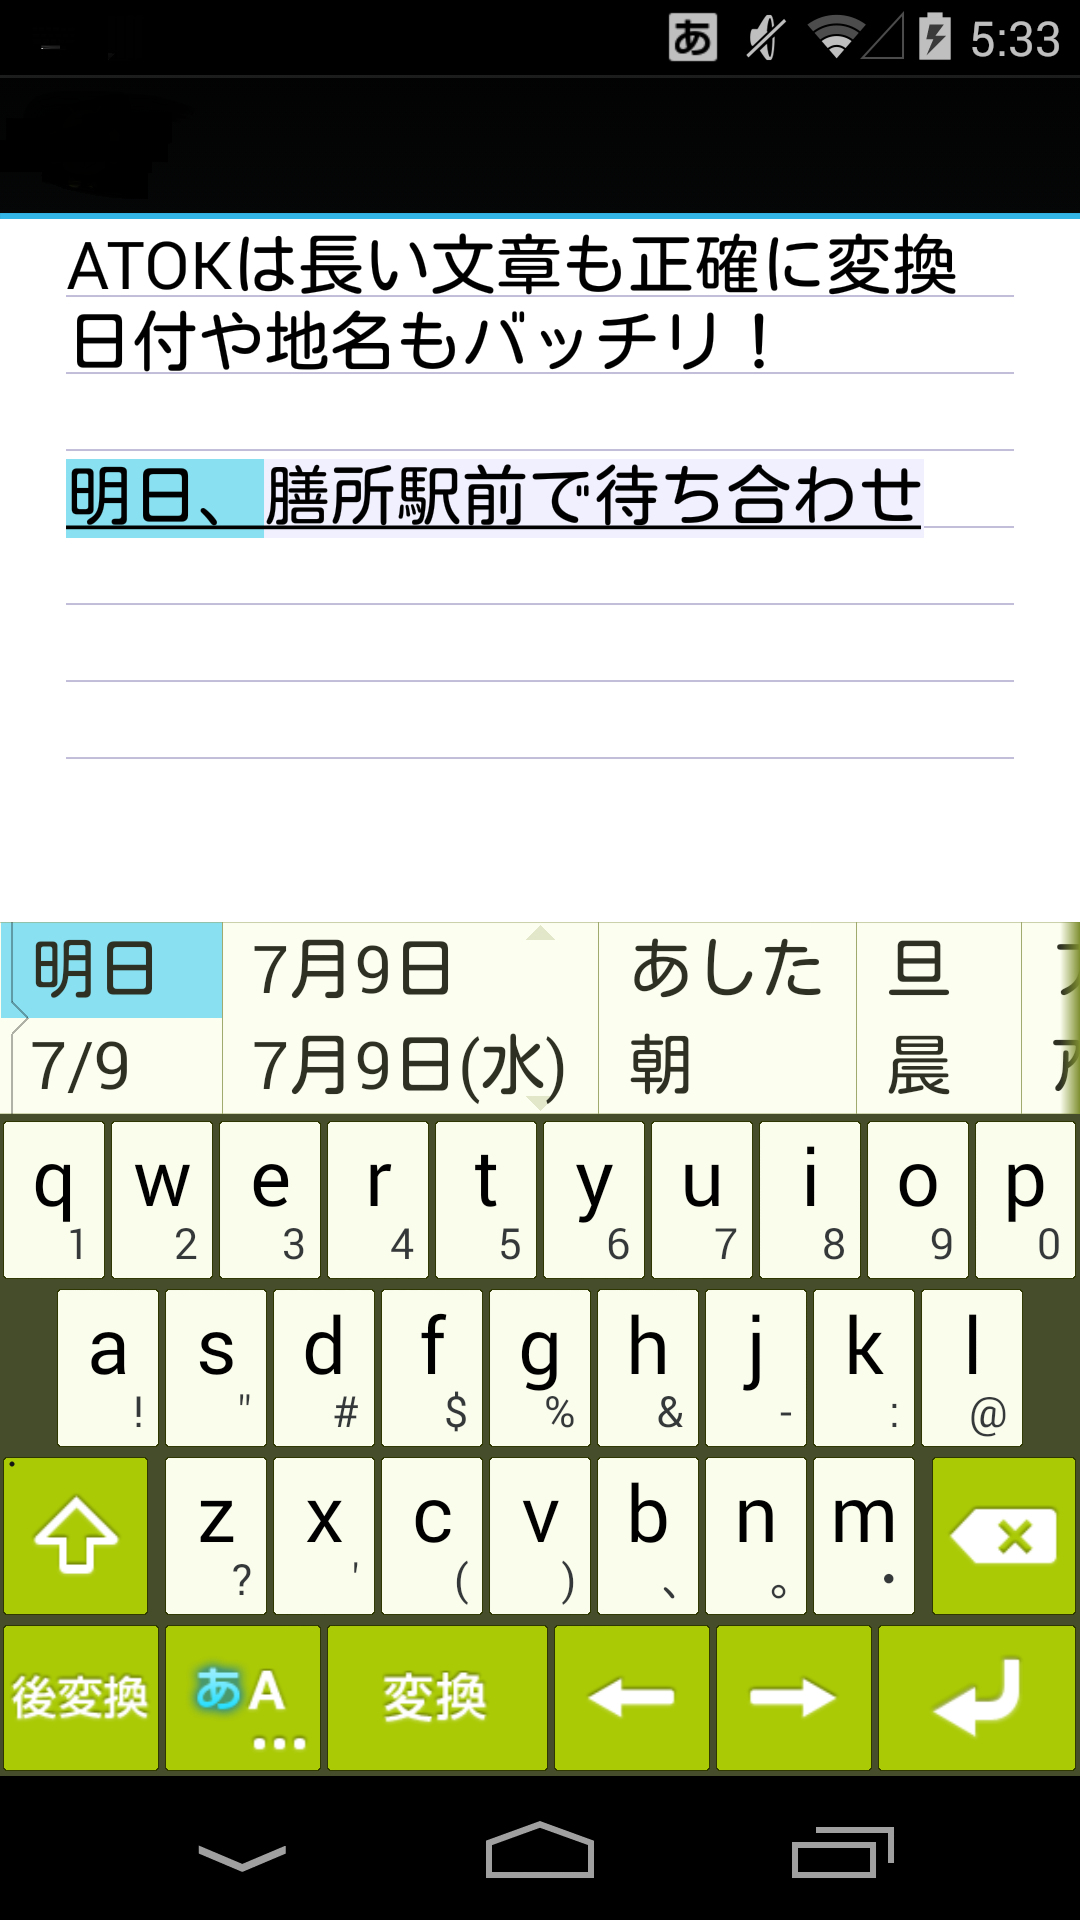 Android application ATOK (日本語入力システム) screenshort